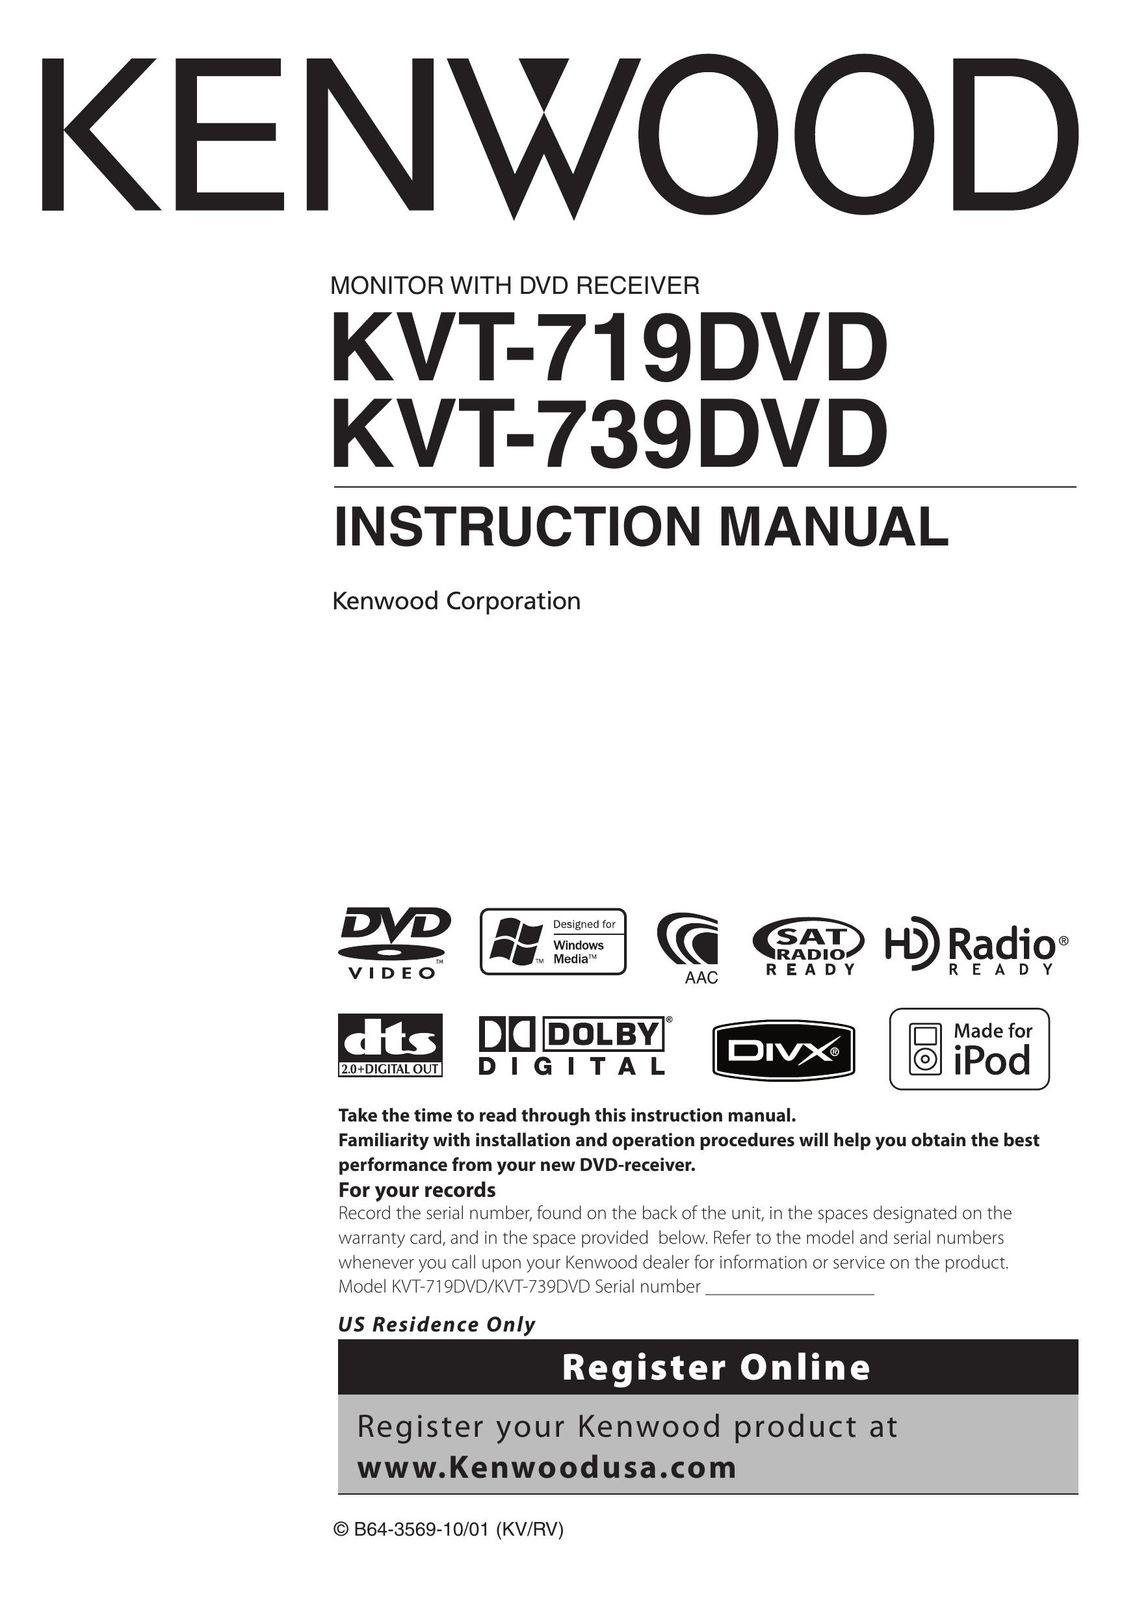 Kenwood KVT-739DVD Portable DVD Player User Manual